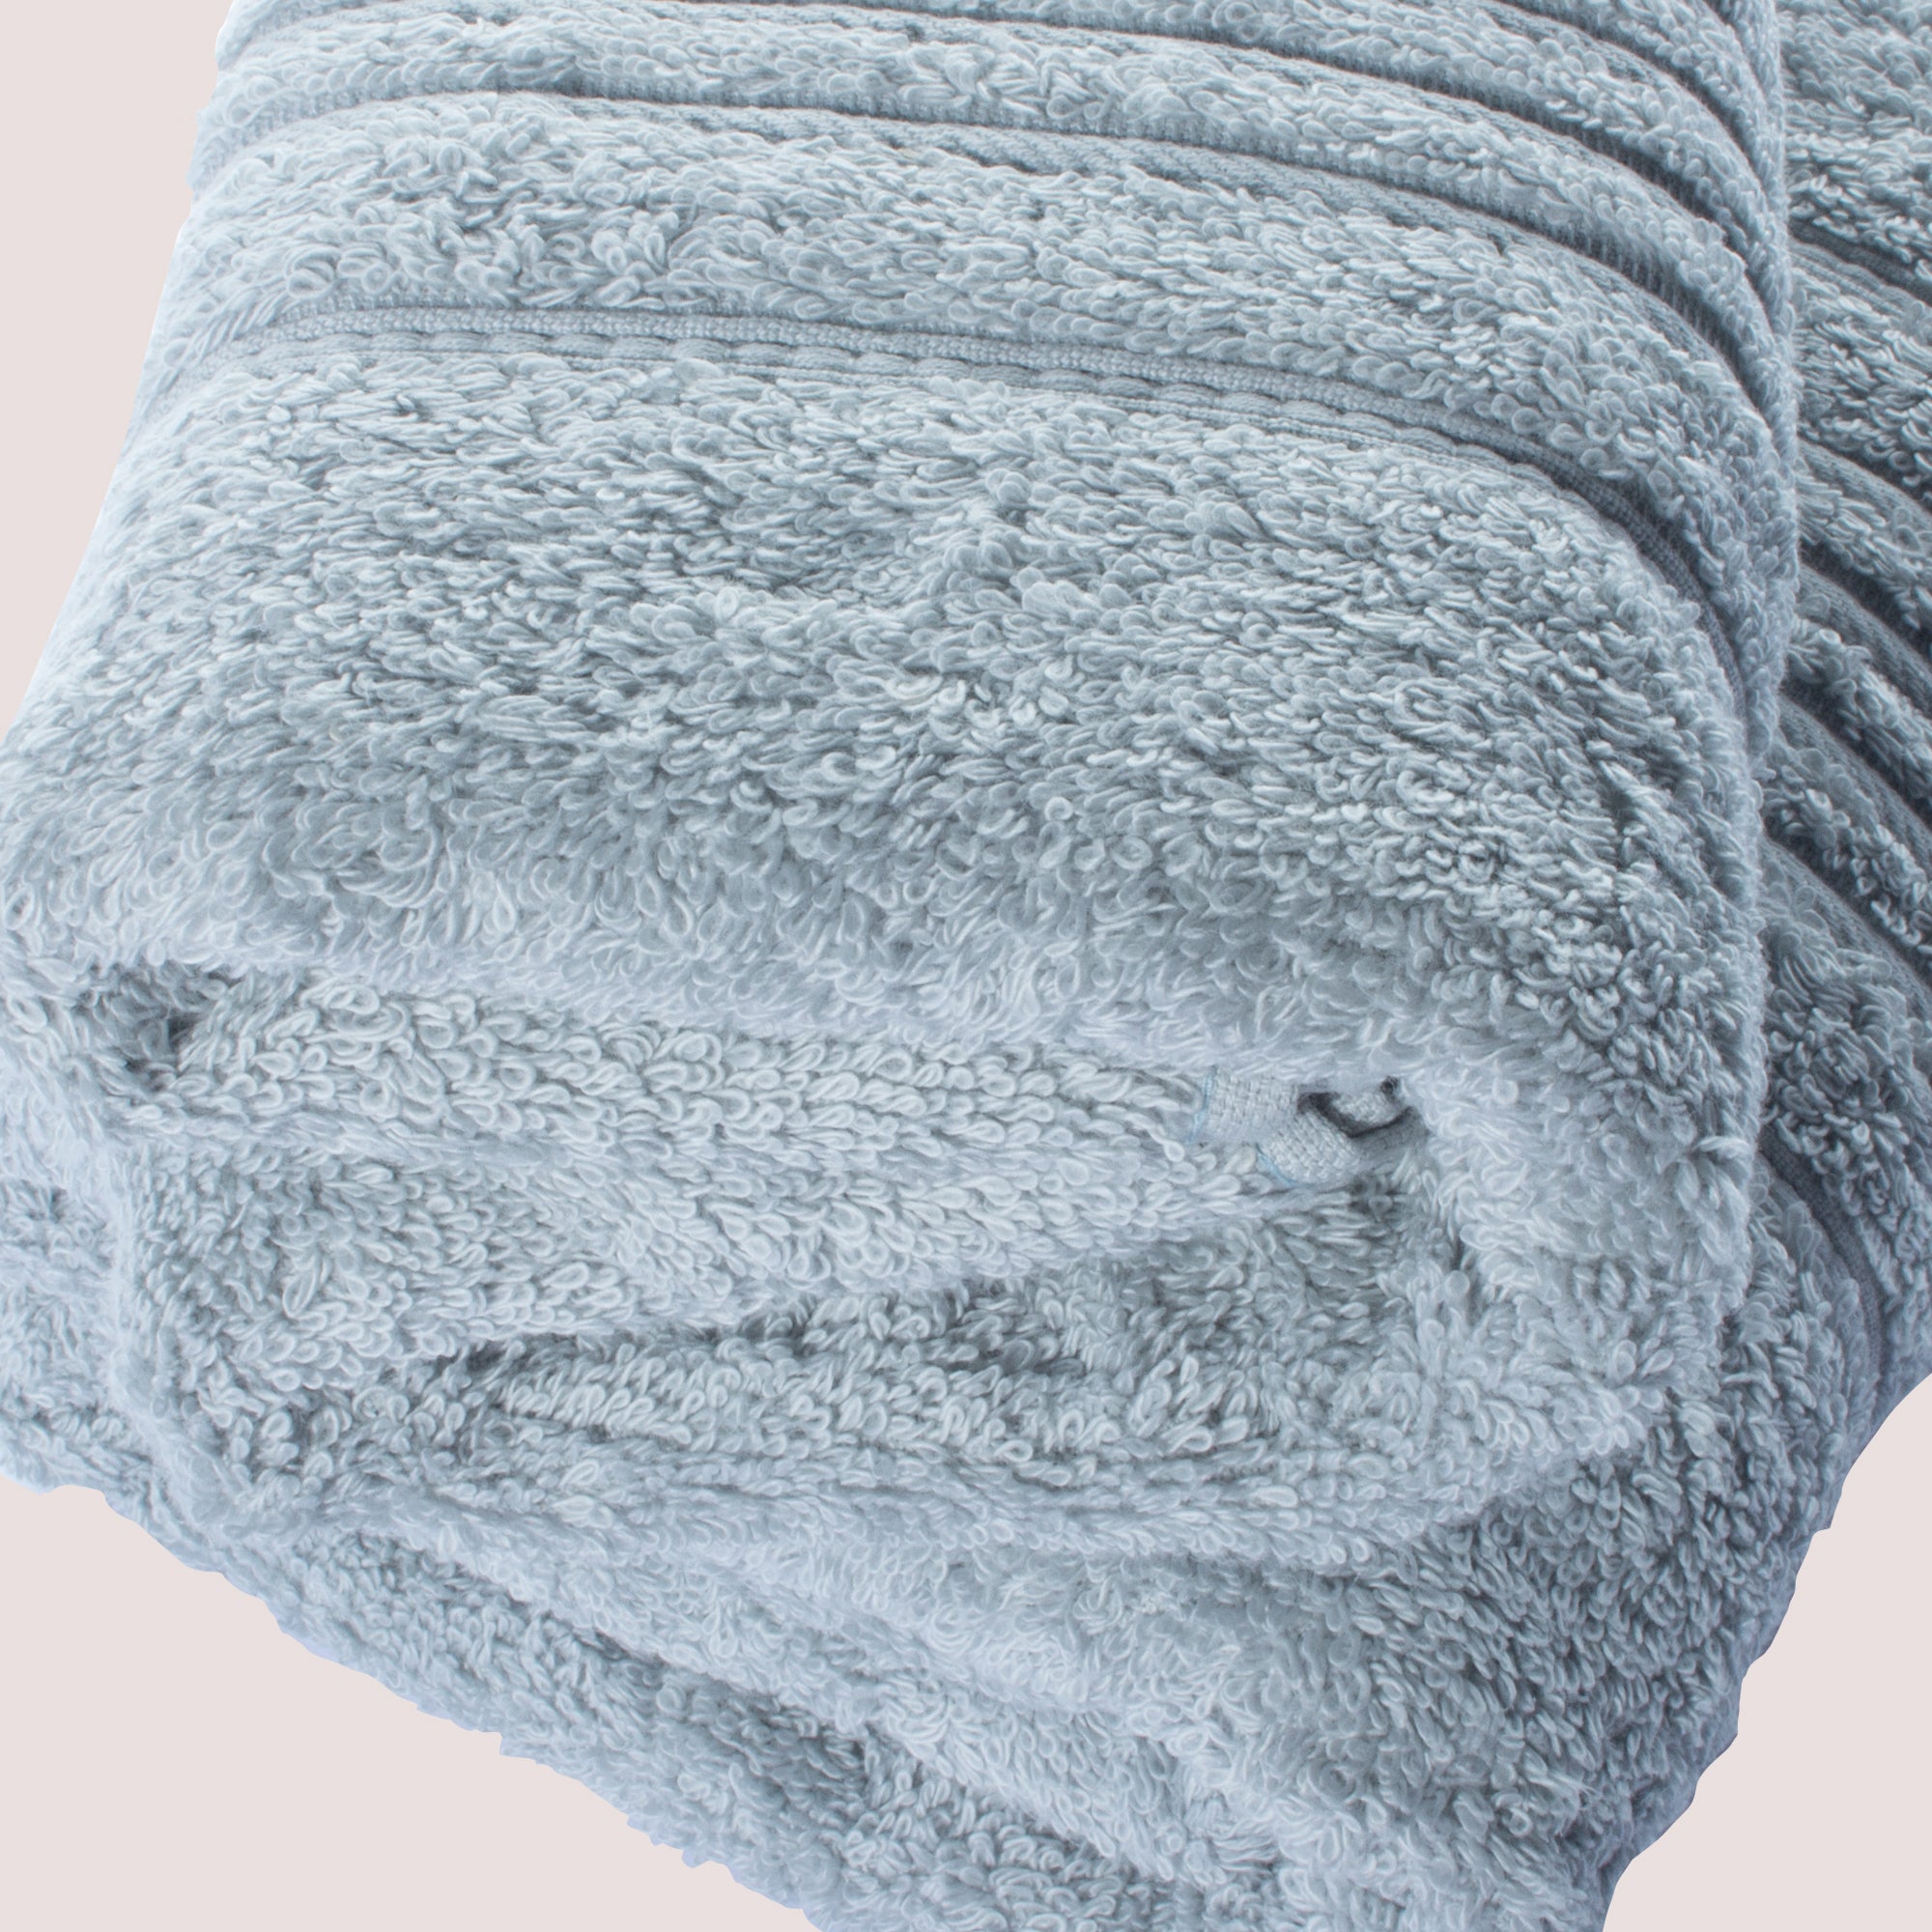 Toalla de baño Rubi 100% algodón egipcio 500 gramos Beige